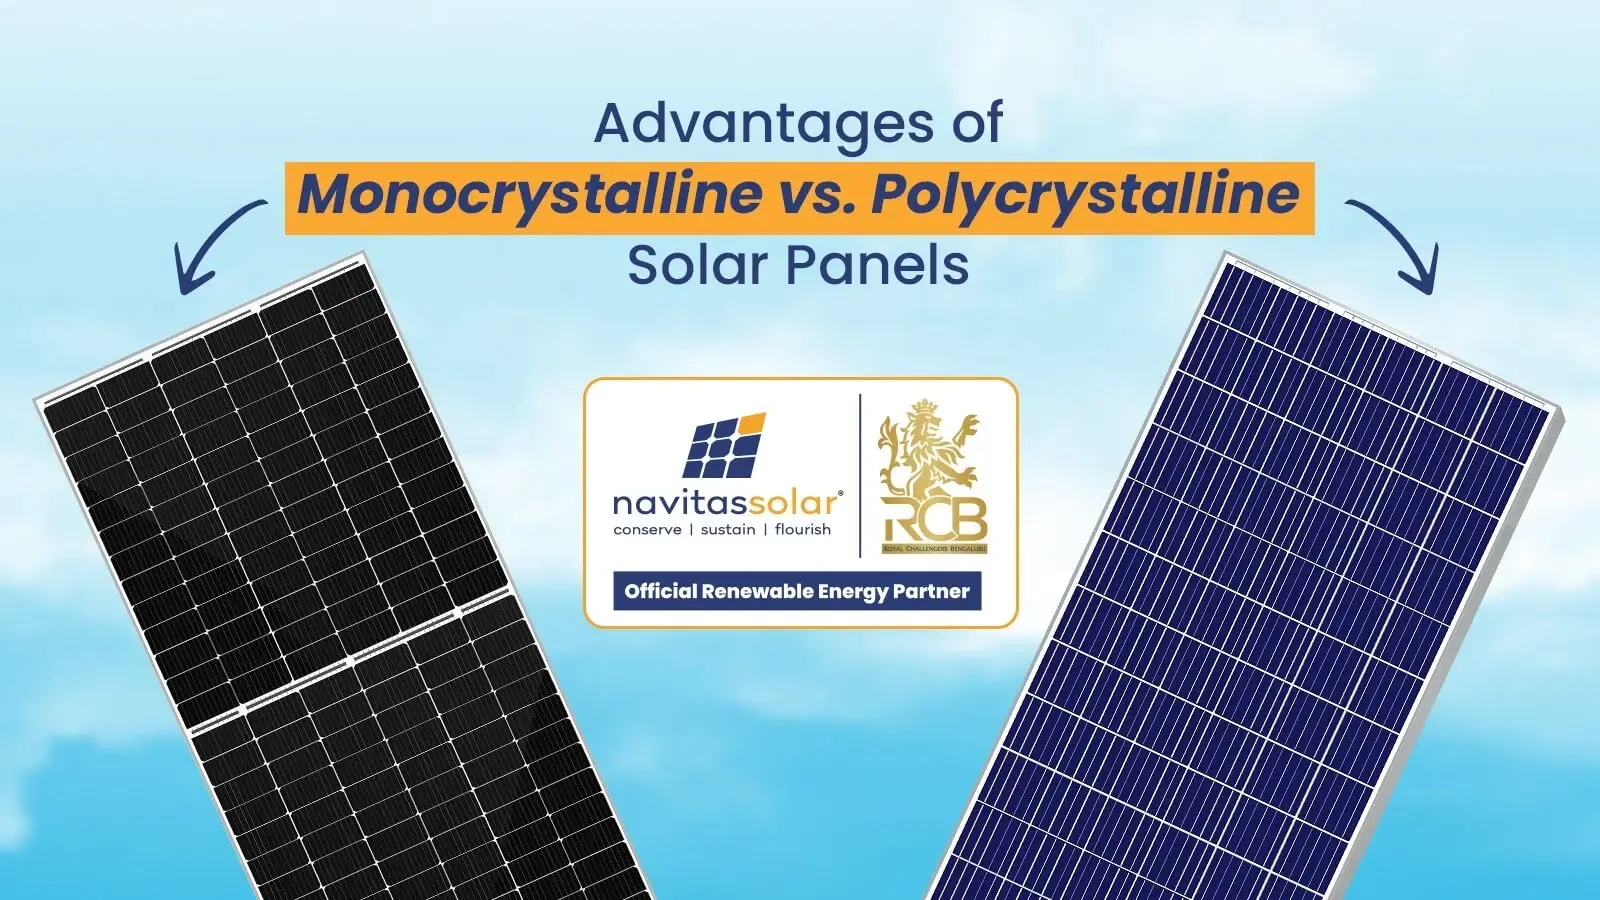 Advantages of Monocrystaline vs polycrystaline solar panels